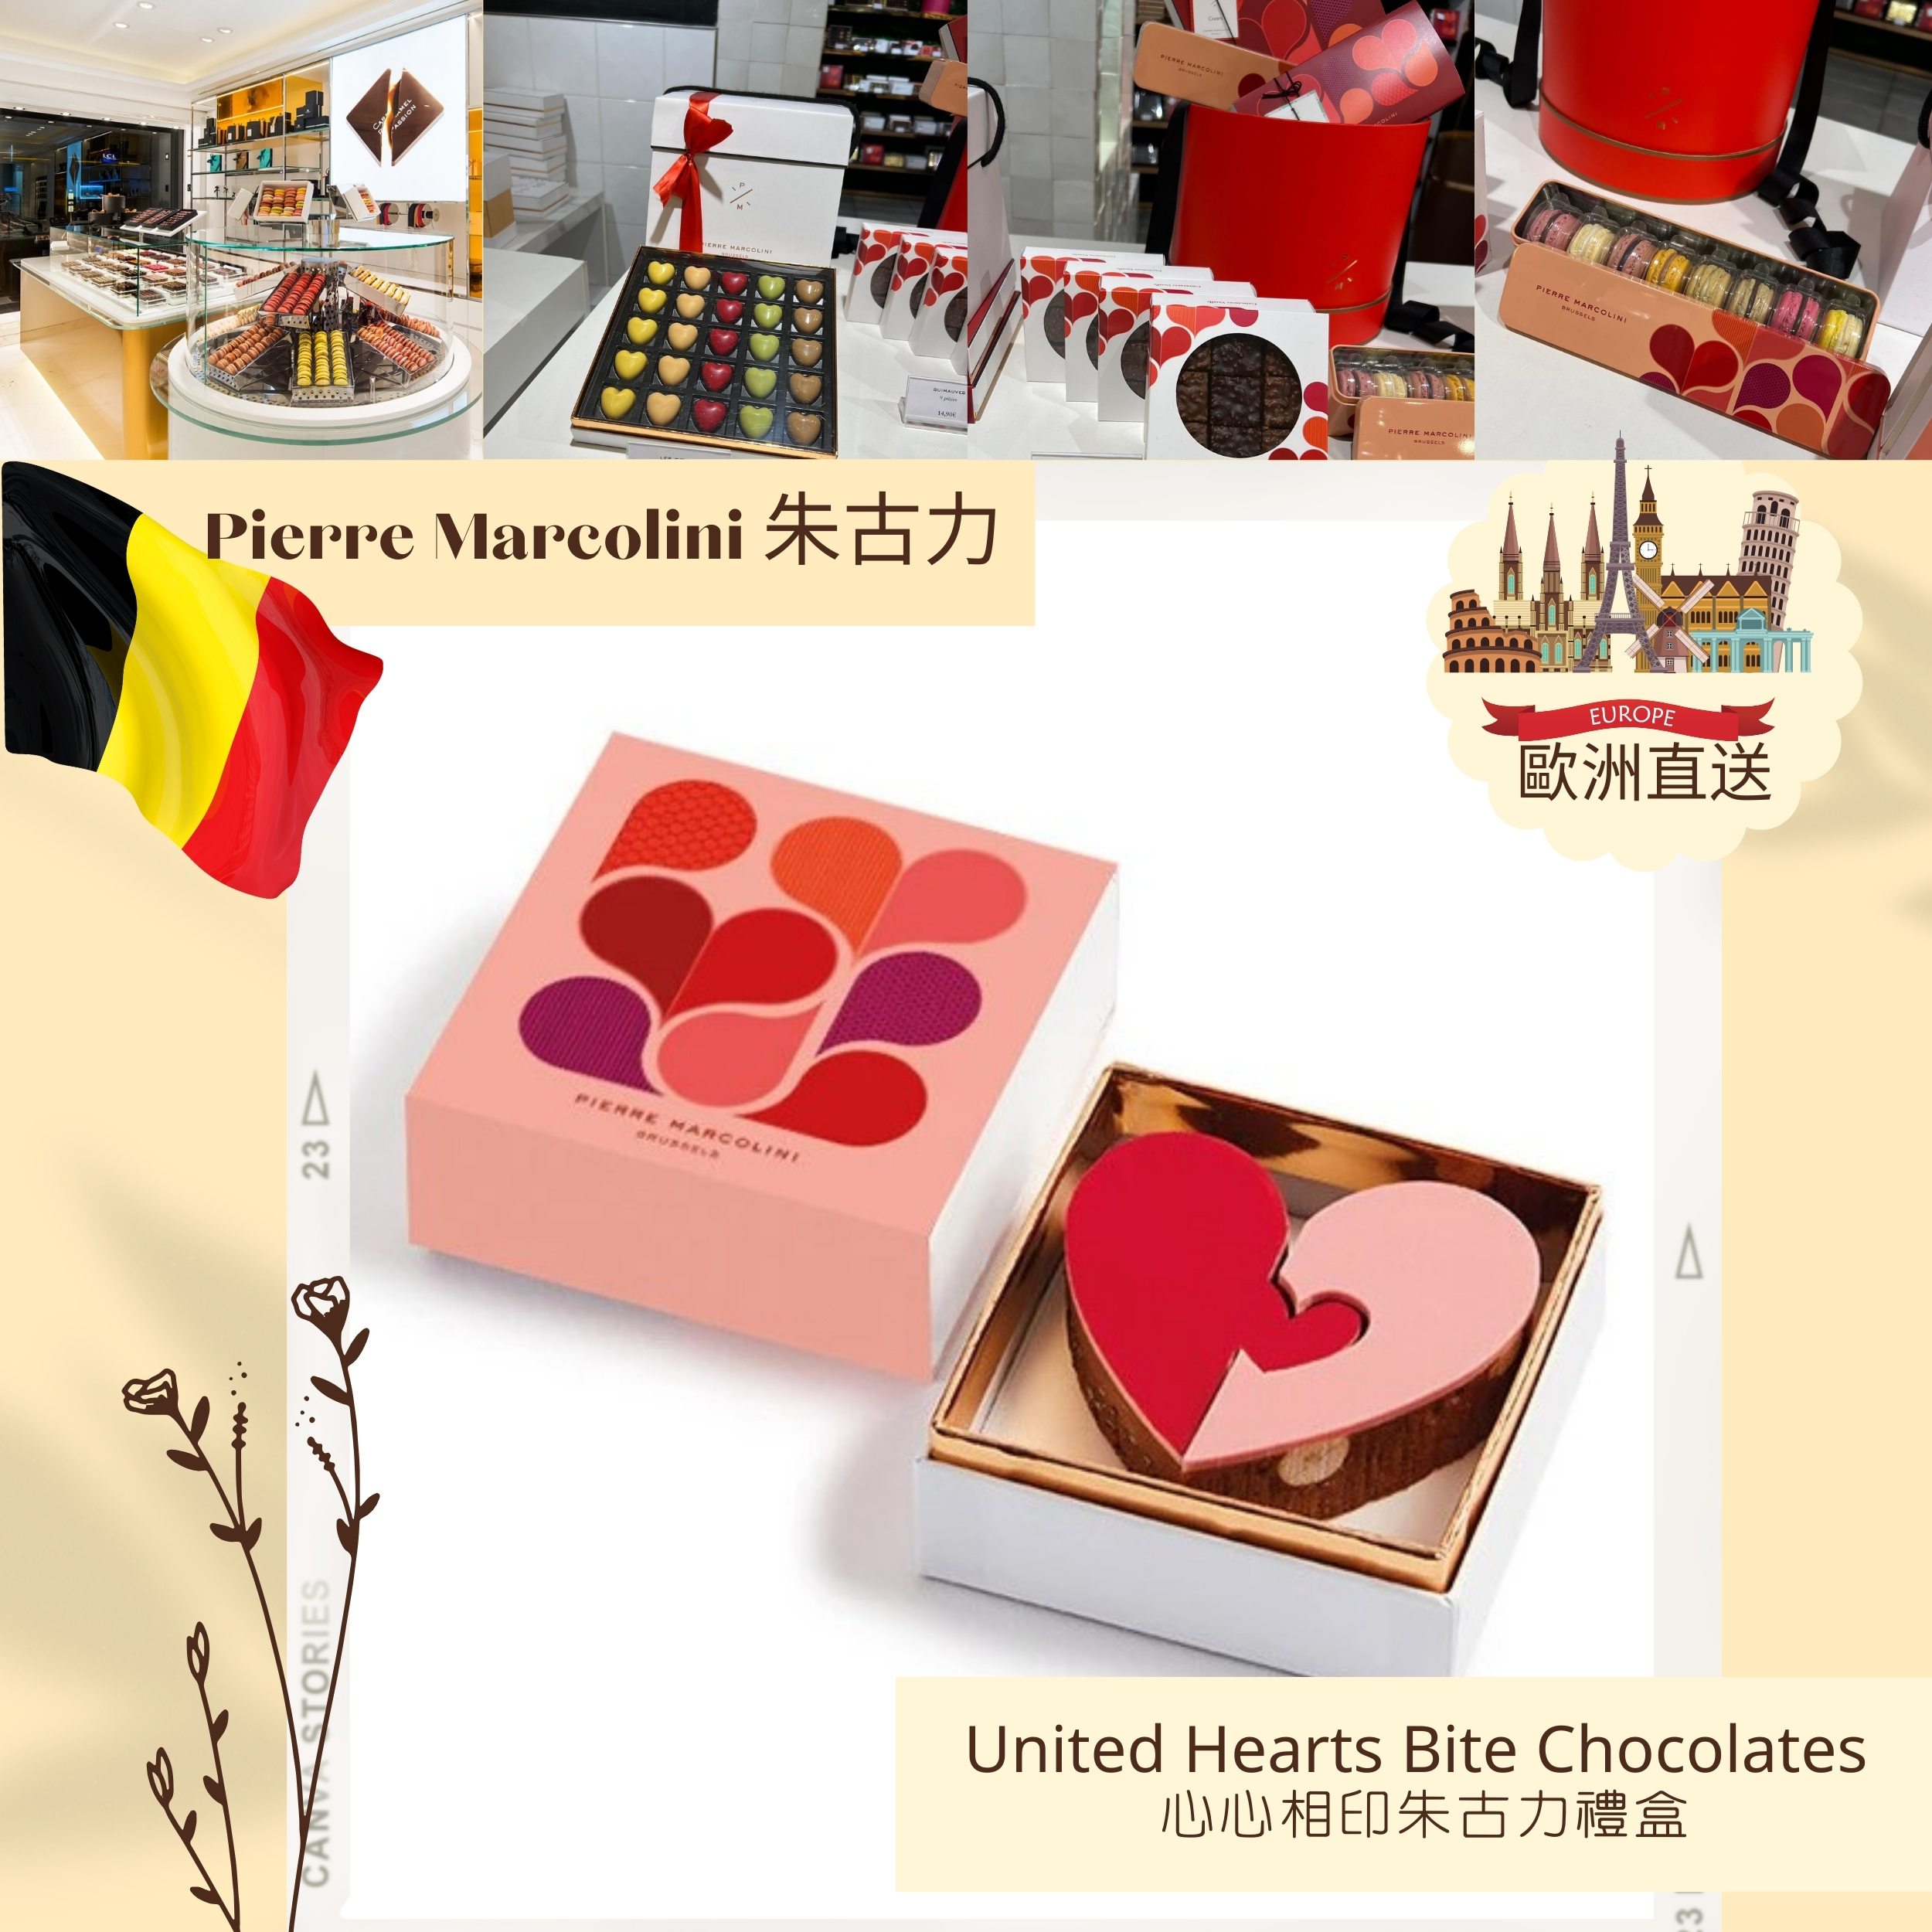  Pierre Marcolini 比利時頂級朱古力品牌 - United Hearts Bite Chocolates 心心相印朱古力禮盒 |情人節限定  | 情人節用一盒朱古力分享愛  | 情人節限定  | 情人節用一盒朱古力分享愛